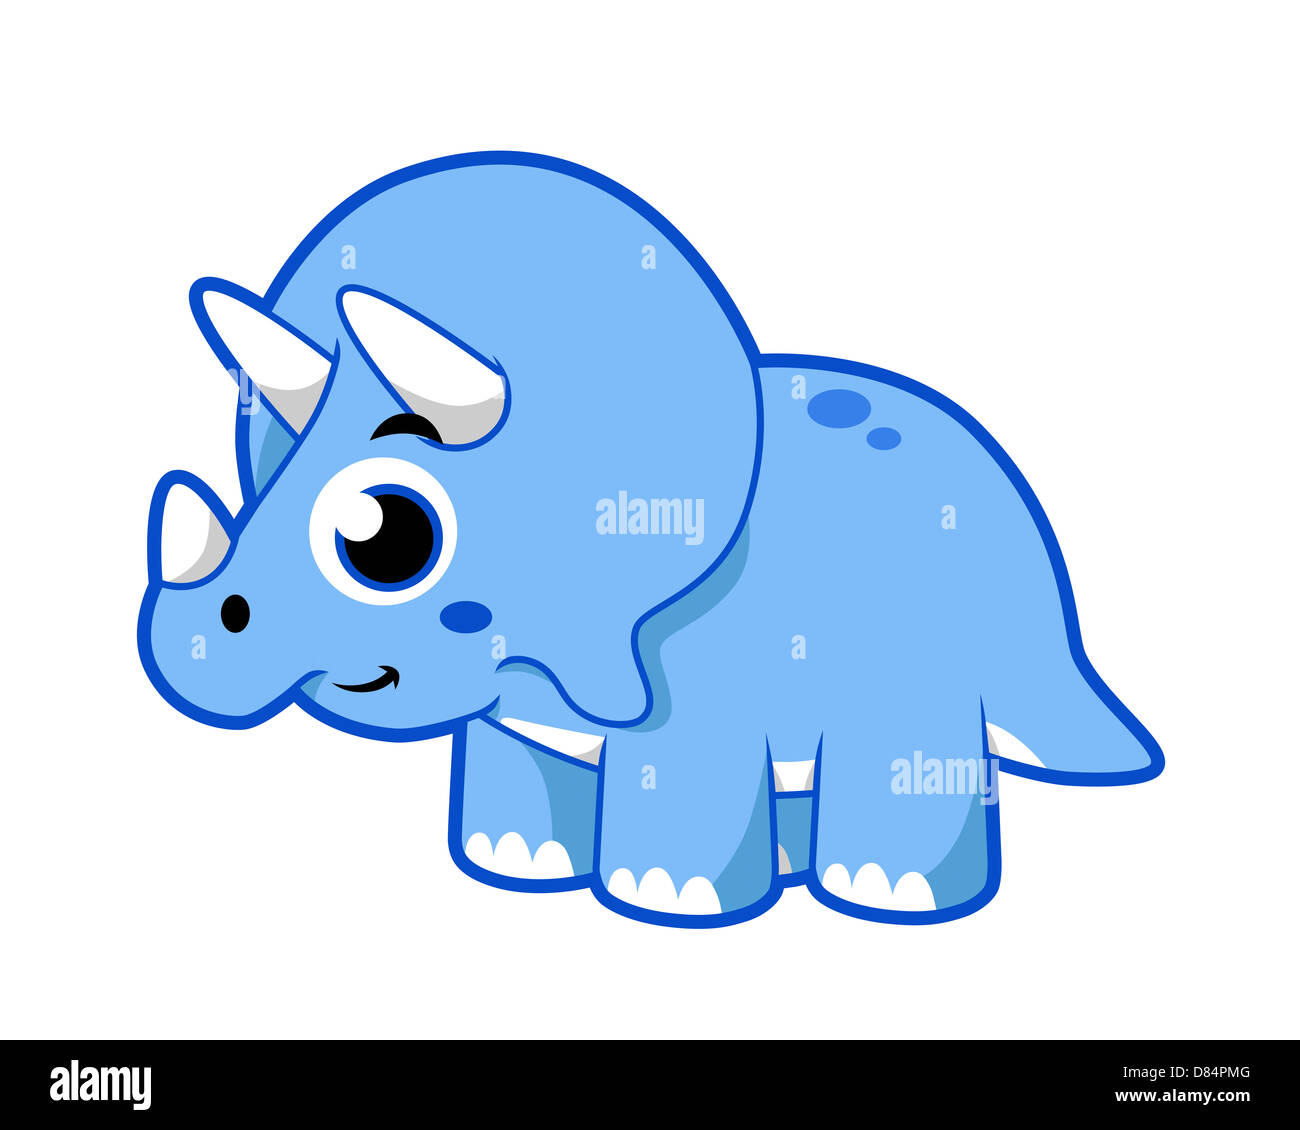 Cute illustration of a Triceratops dinosaur. Stock Photo